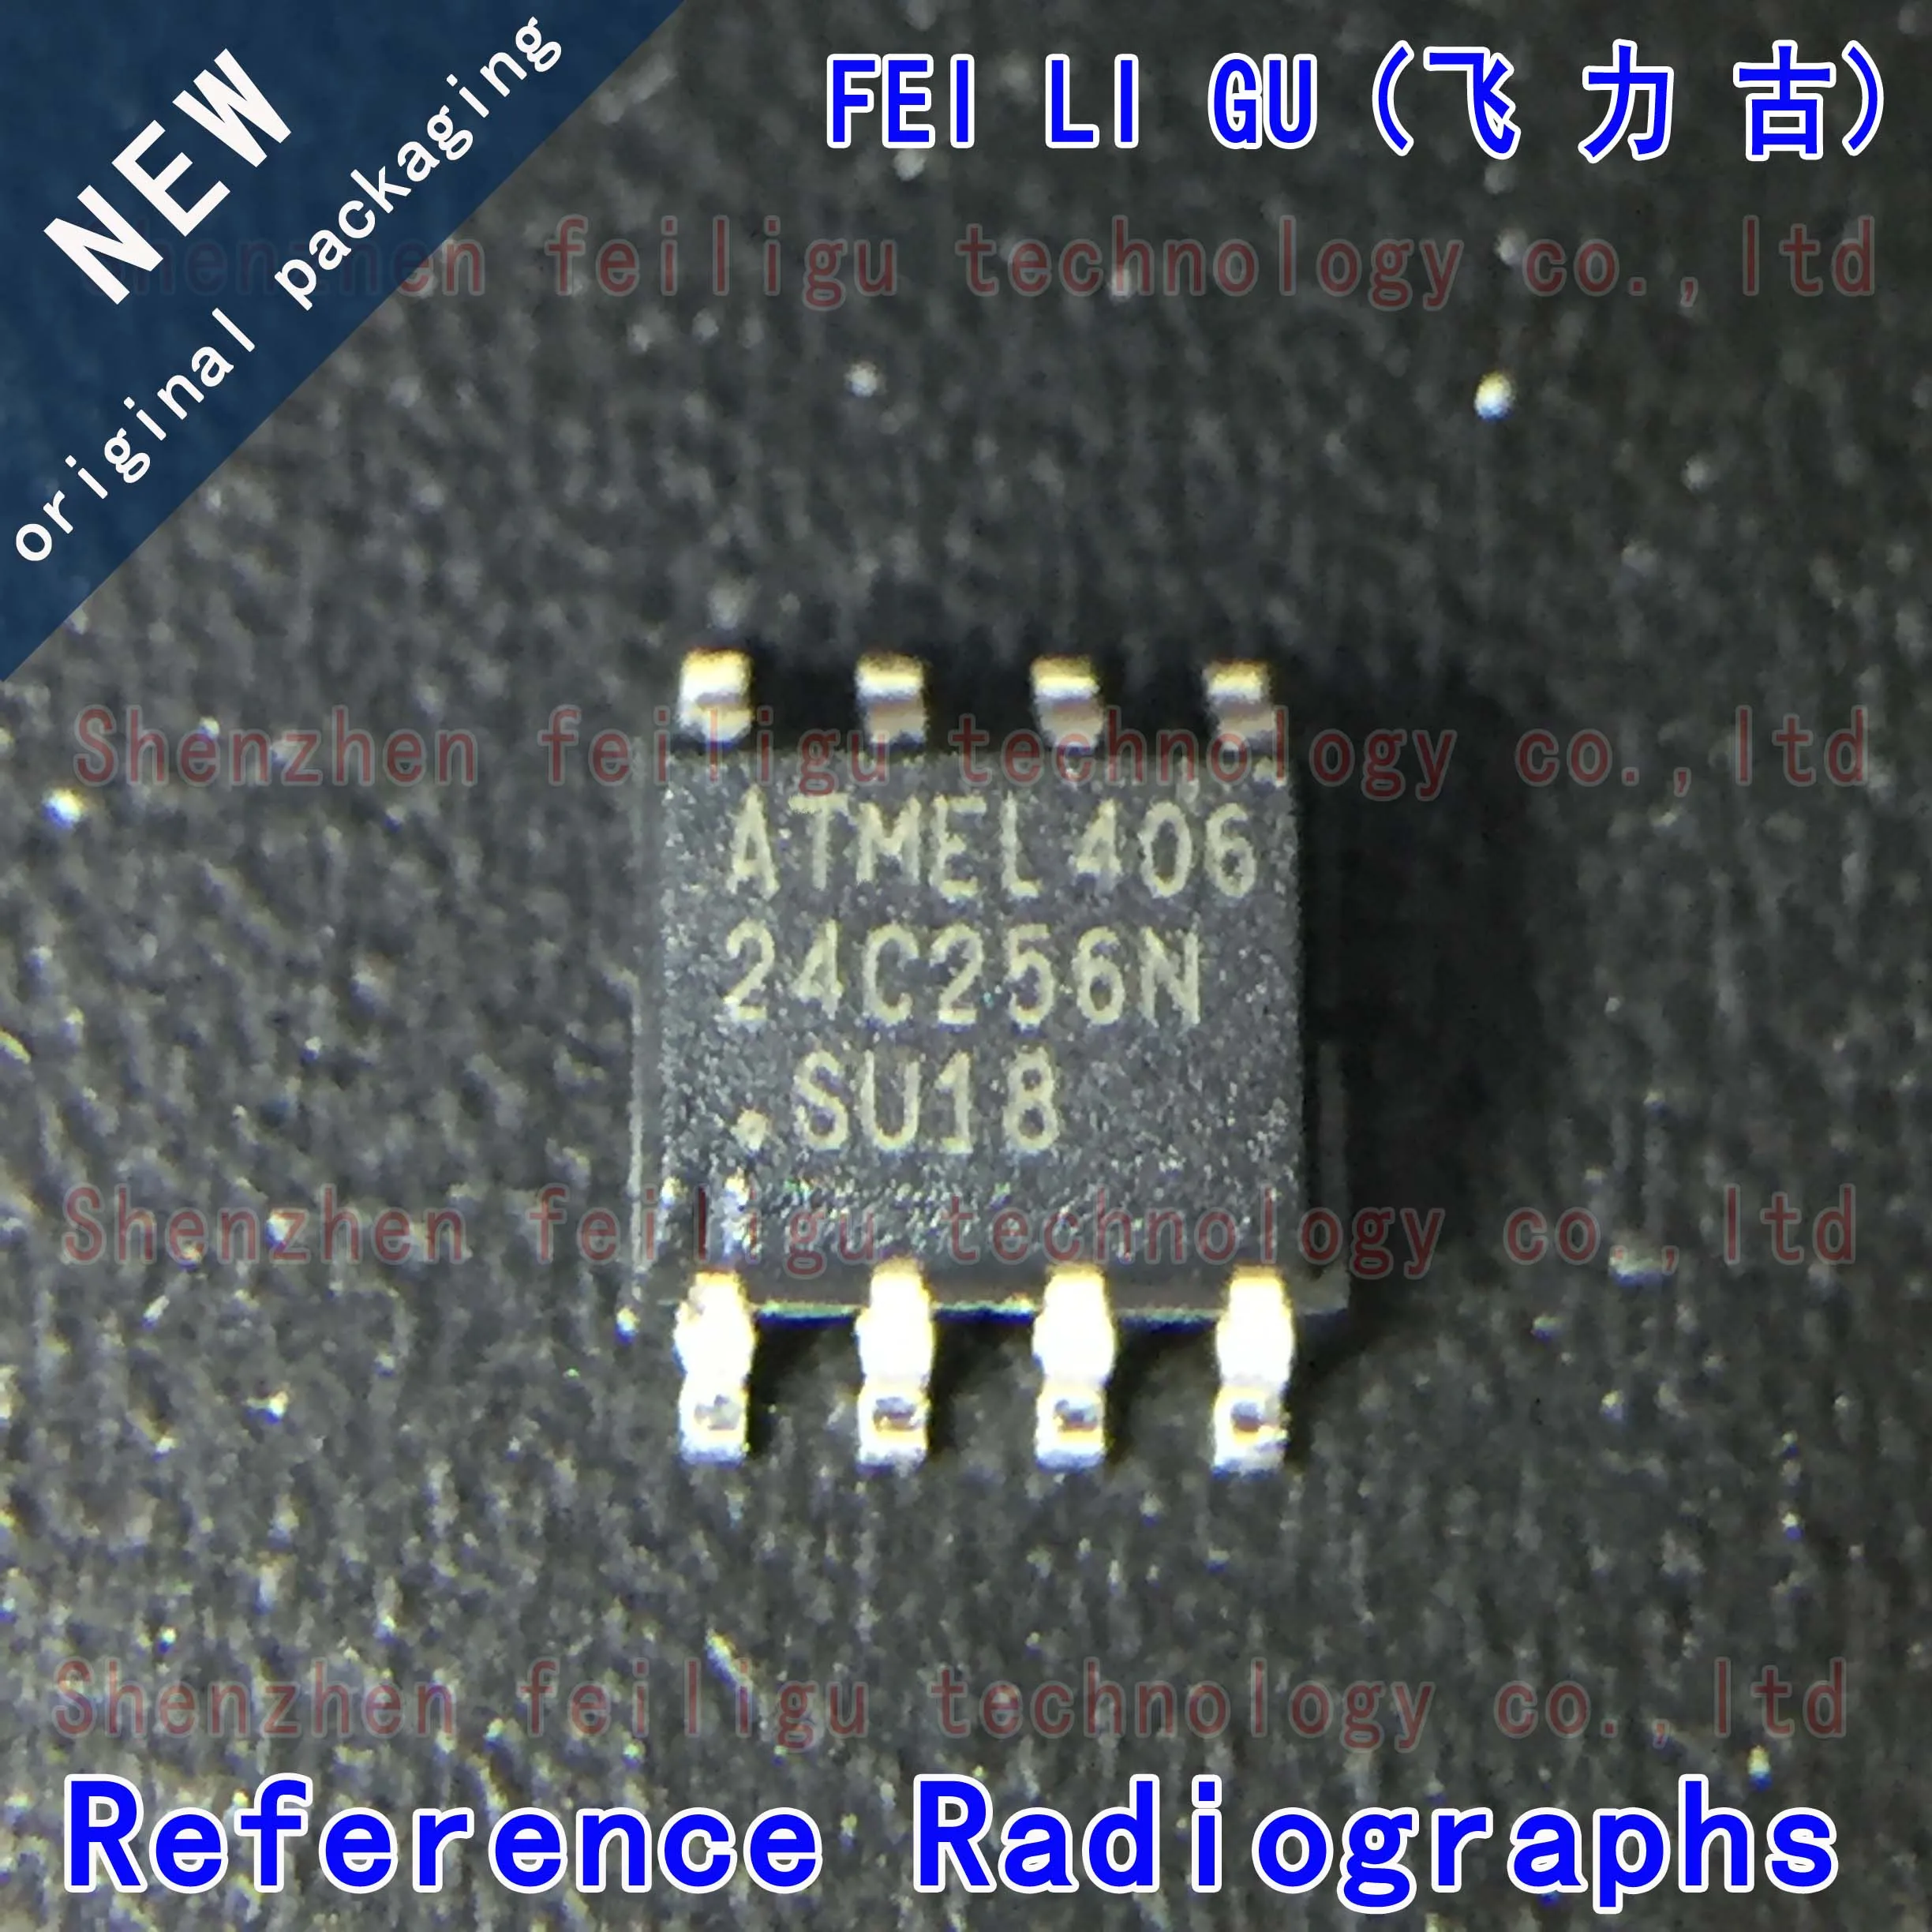 1~50PCS 100% New original AT24C256BN-10SU-1.8 24C256BN SU18 package:SOP8 EEPROM memory chip new original at25f2048n 10su 2 7 package sop8 chip integrated circuit ic